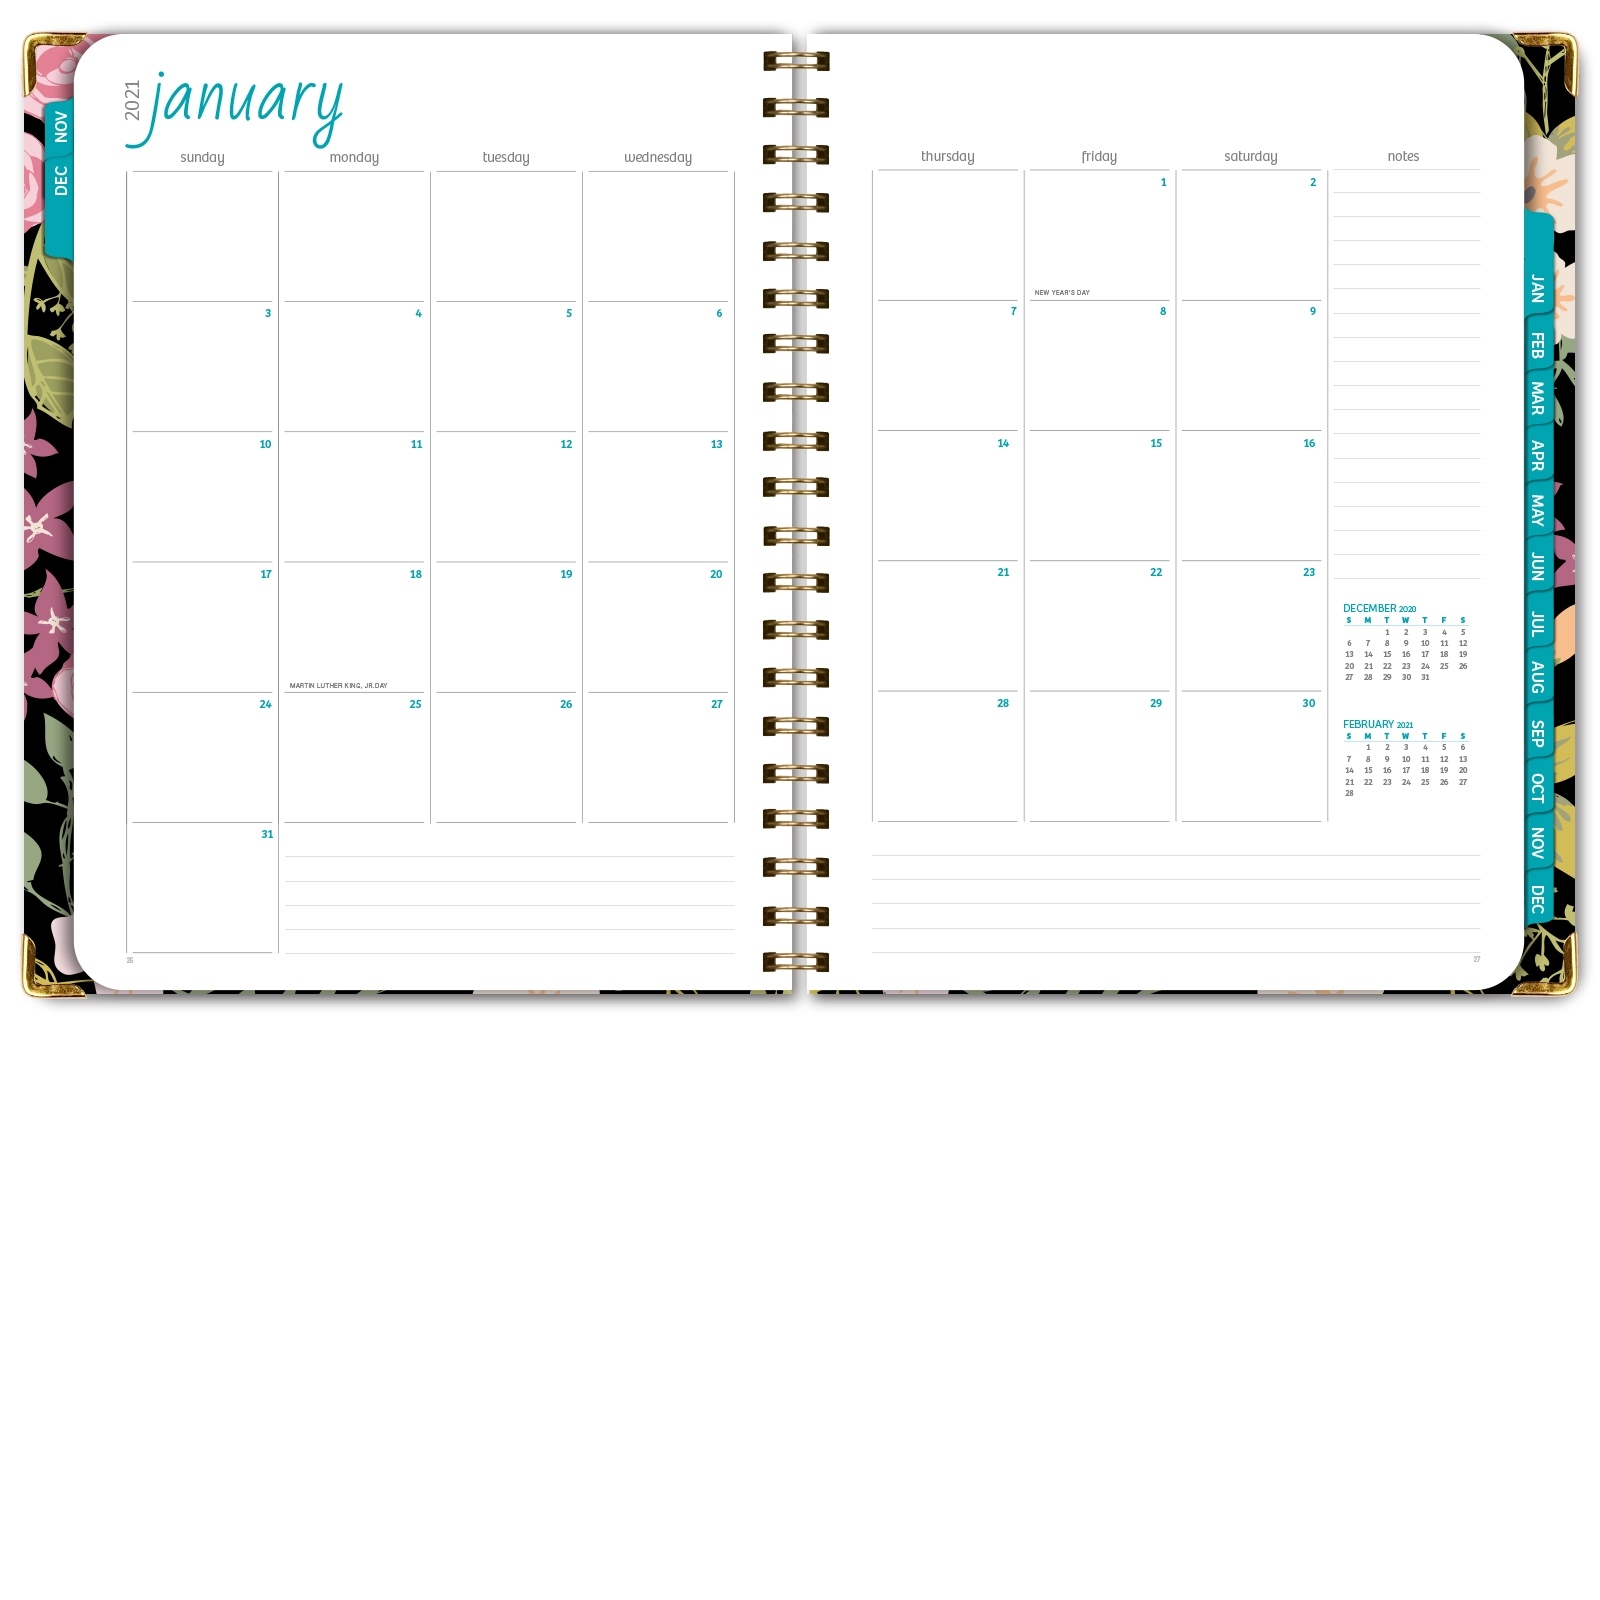 Hardcover 2021 Planner - (Nov 2020 - Dec 2021) Daily Weekly Monthly Planner | Ebay Daily Calendar December 2021